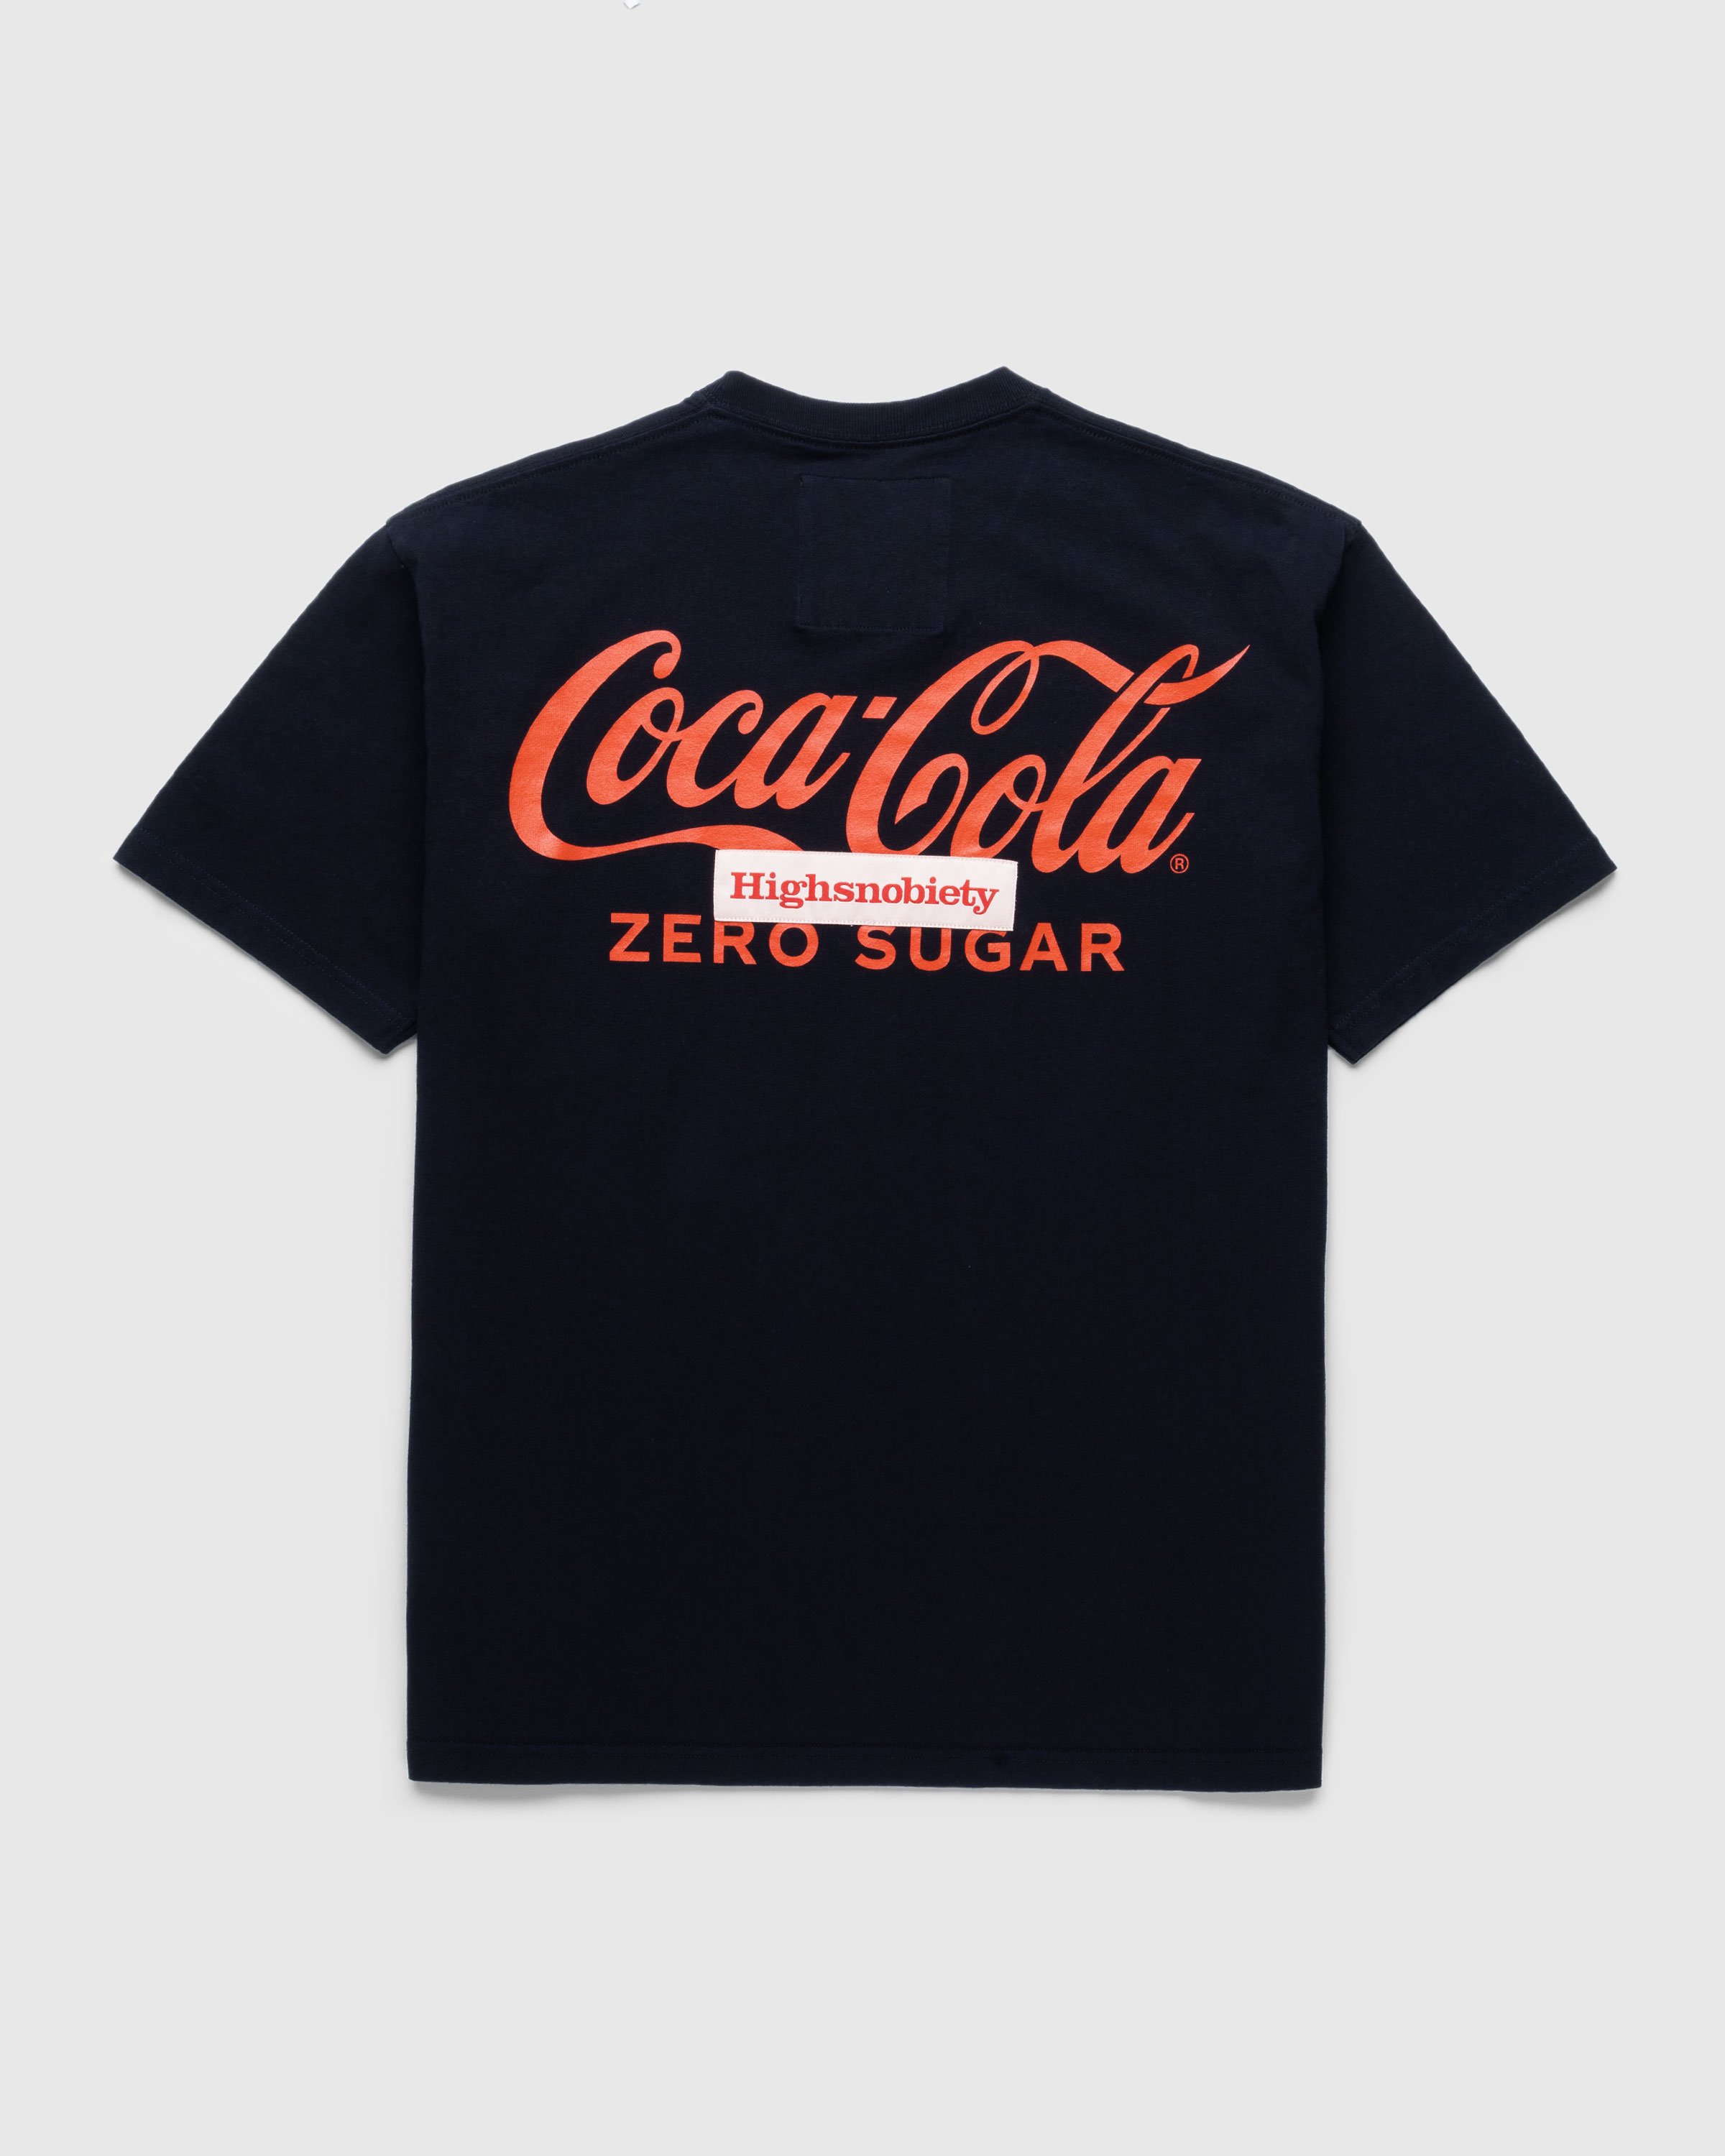 Highsnobiety x Coca-Cola Zero Sugar - Short Sleeve T-Shirt Black - Clothing - Black - Image 1